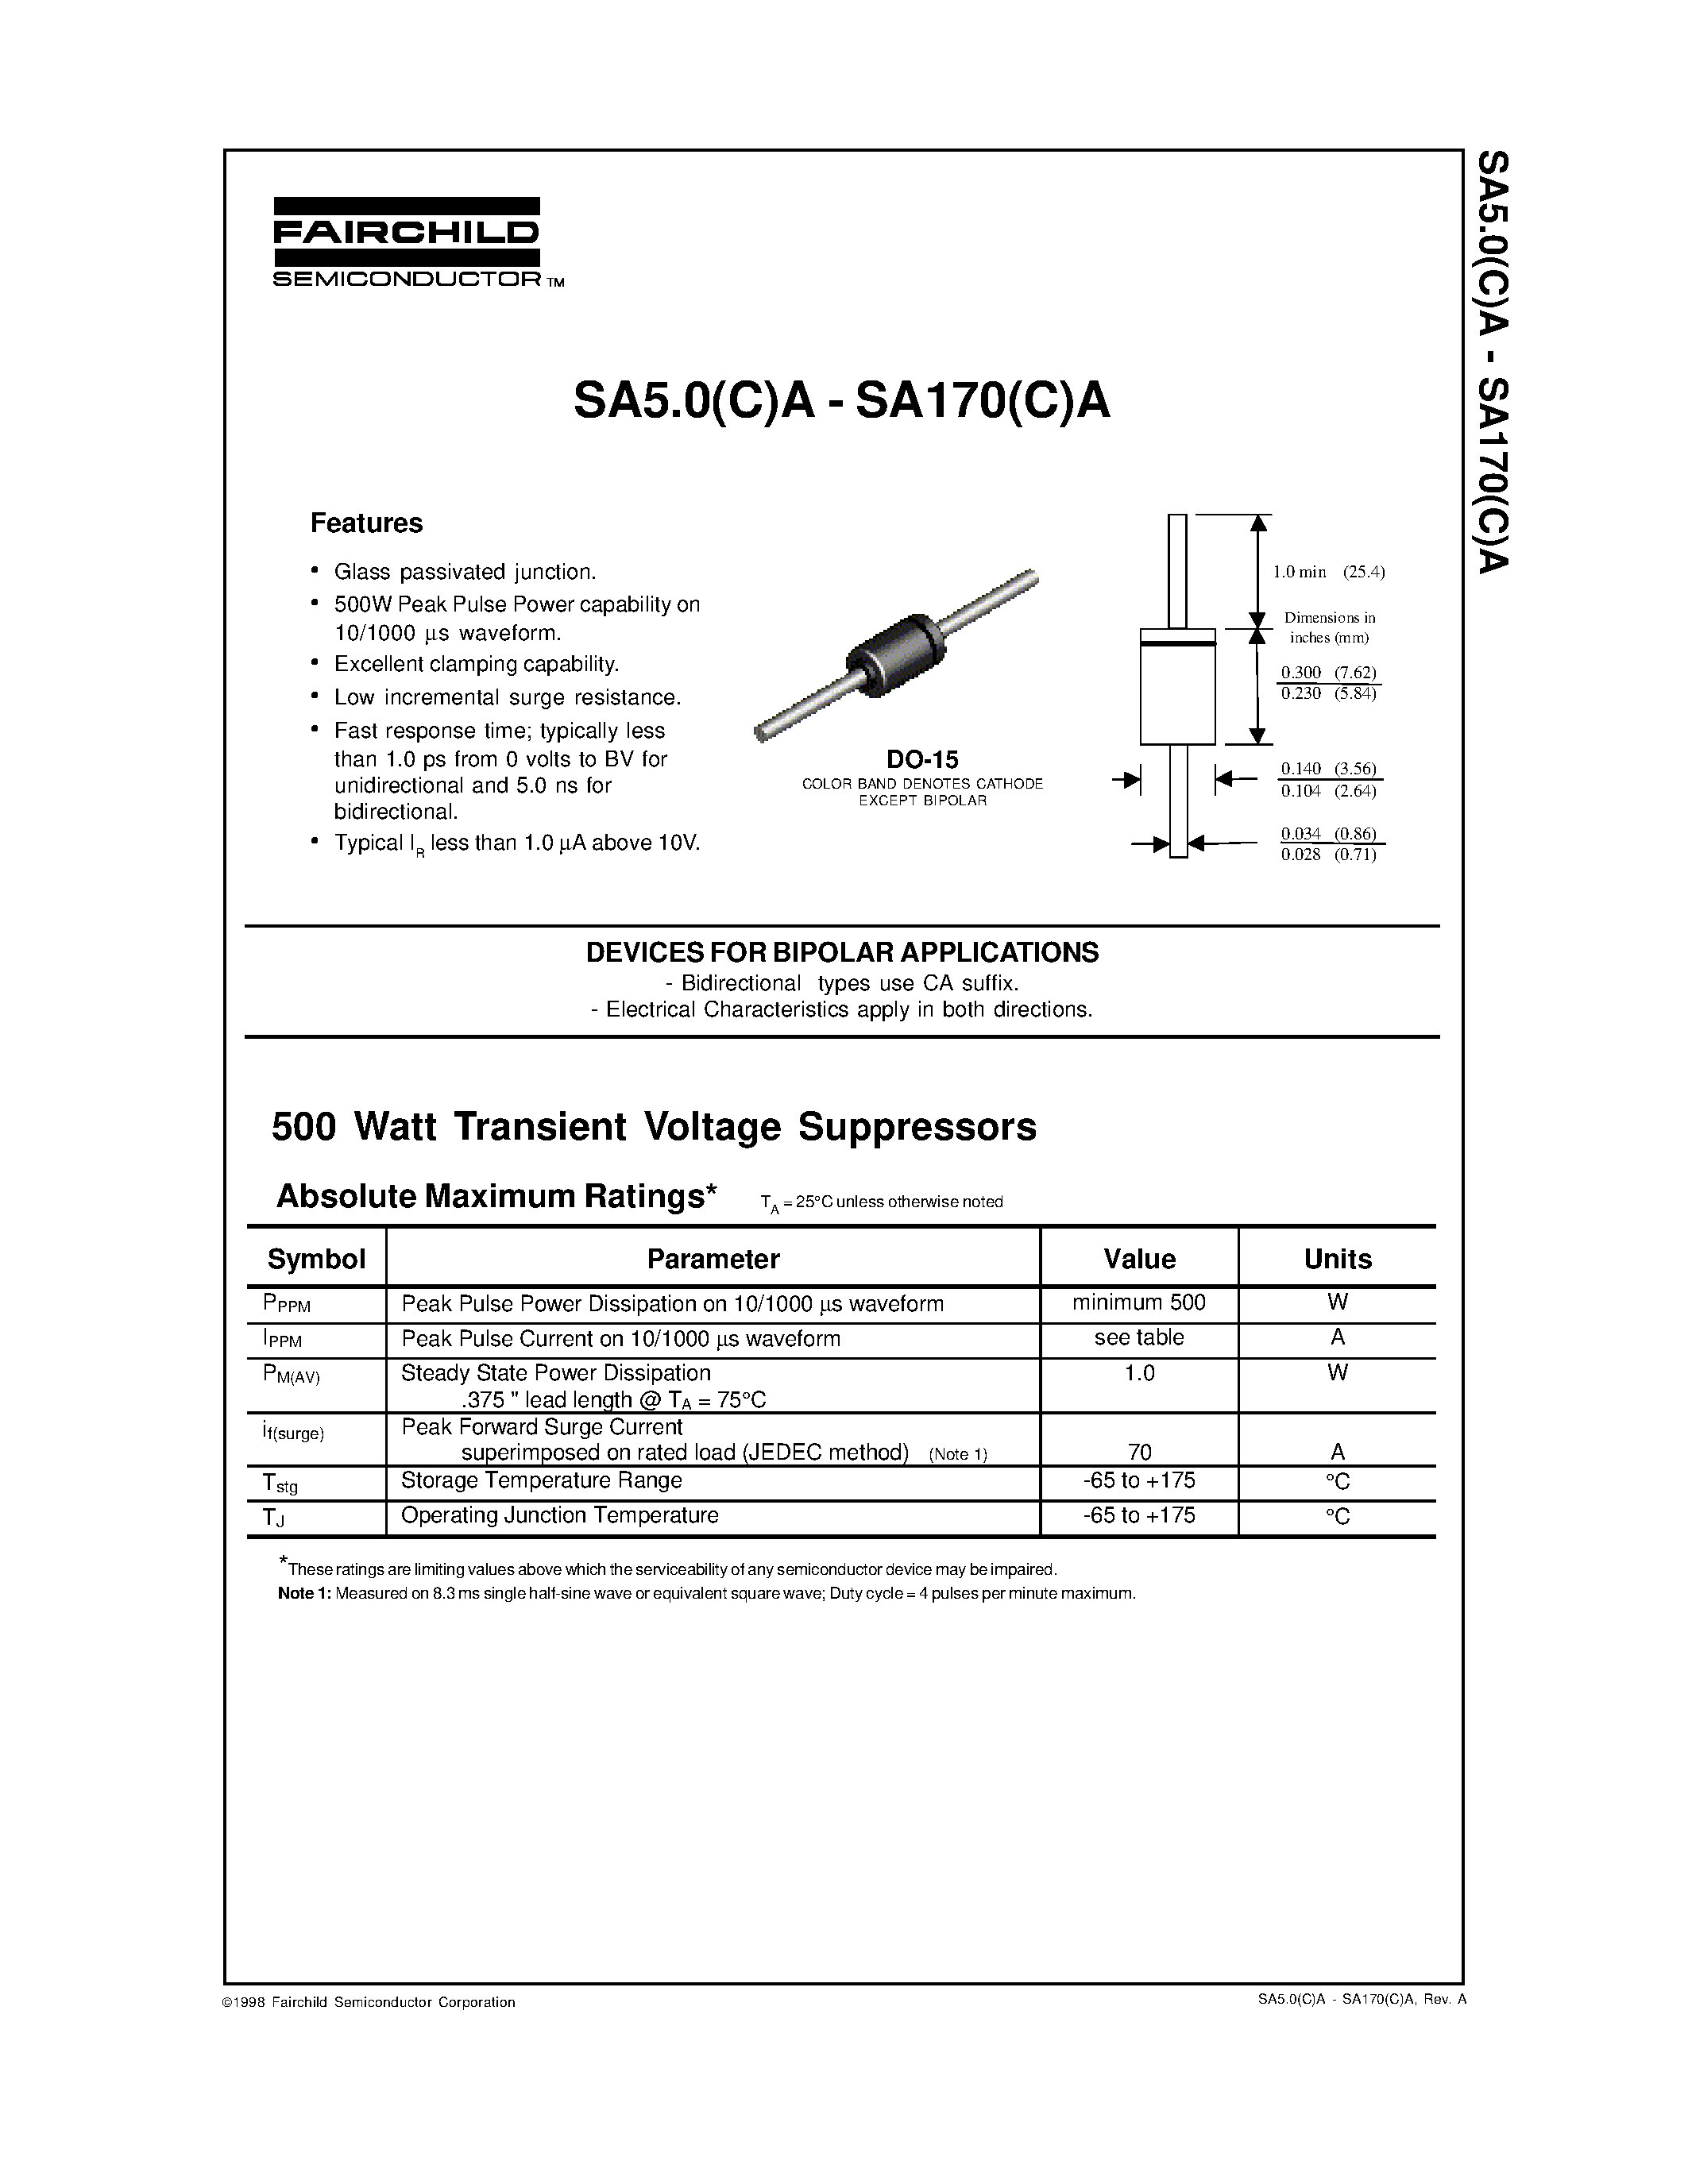 Даташит SA30(C)A - DEVICES FOR BIPOLAR APPLICATIONS страница 1